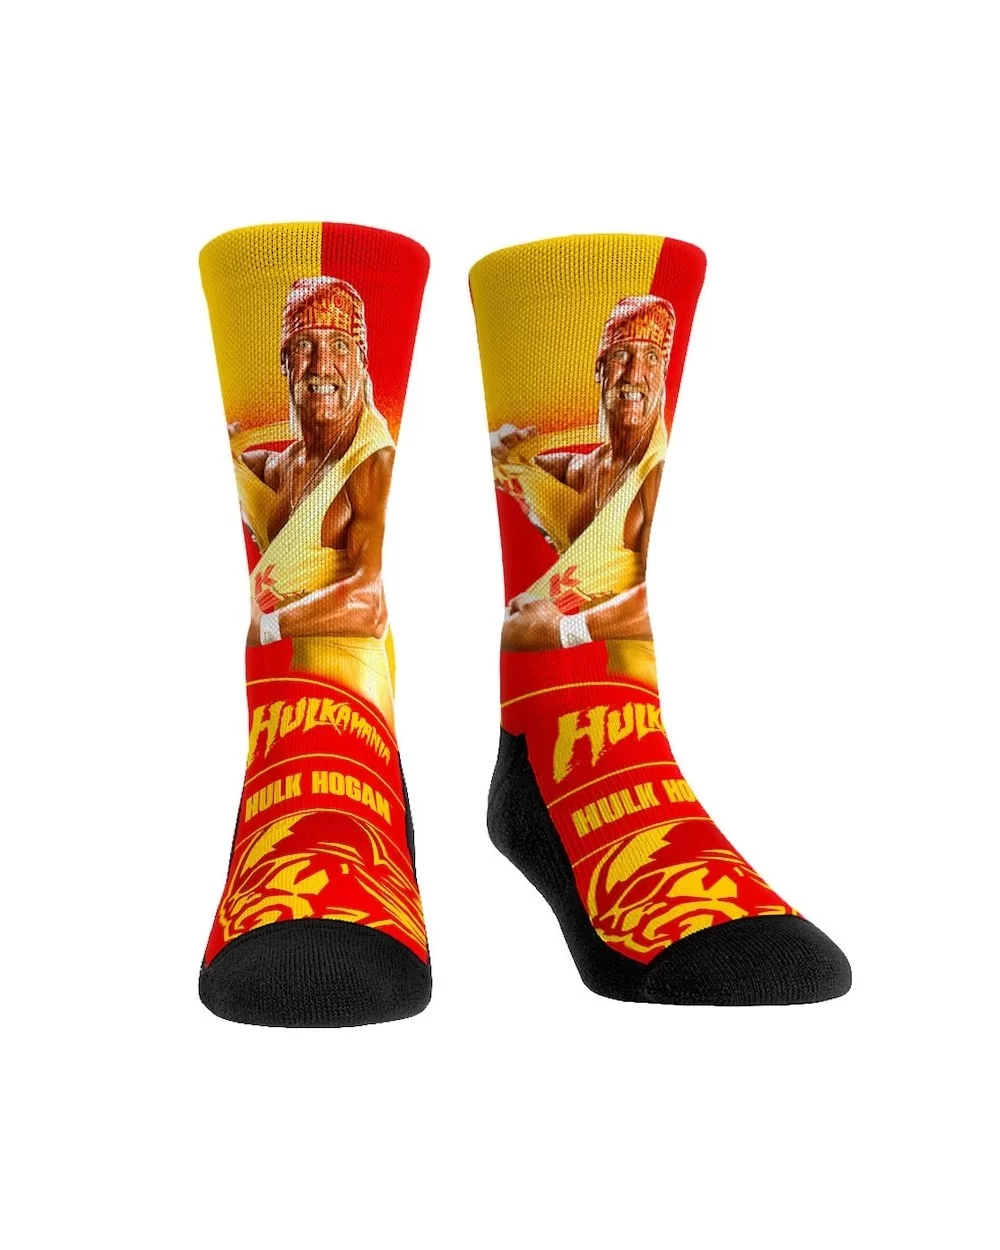 Youth Rock Em Socks Hulk Hogan nWo Stare Down Crew Socks $3.84 Apparel